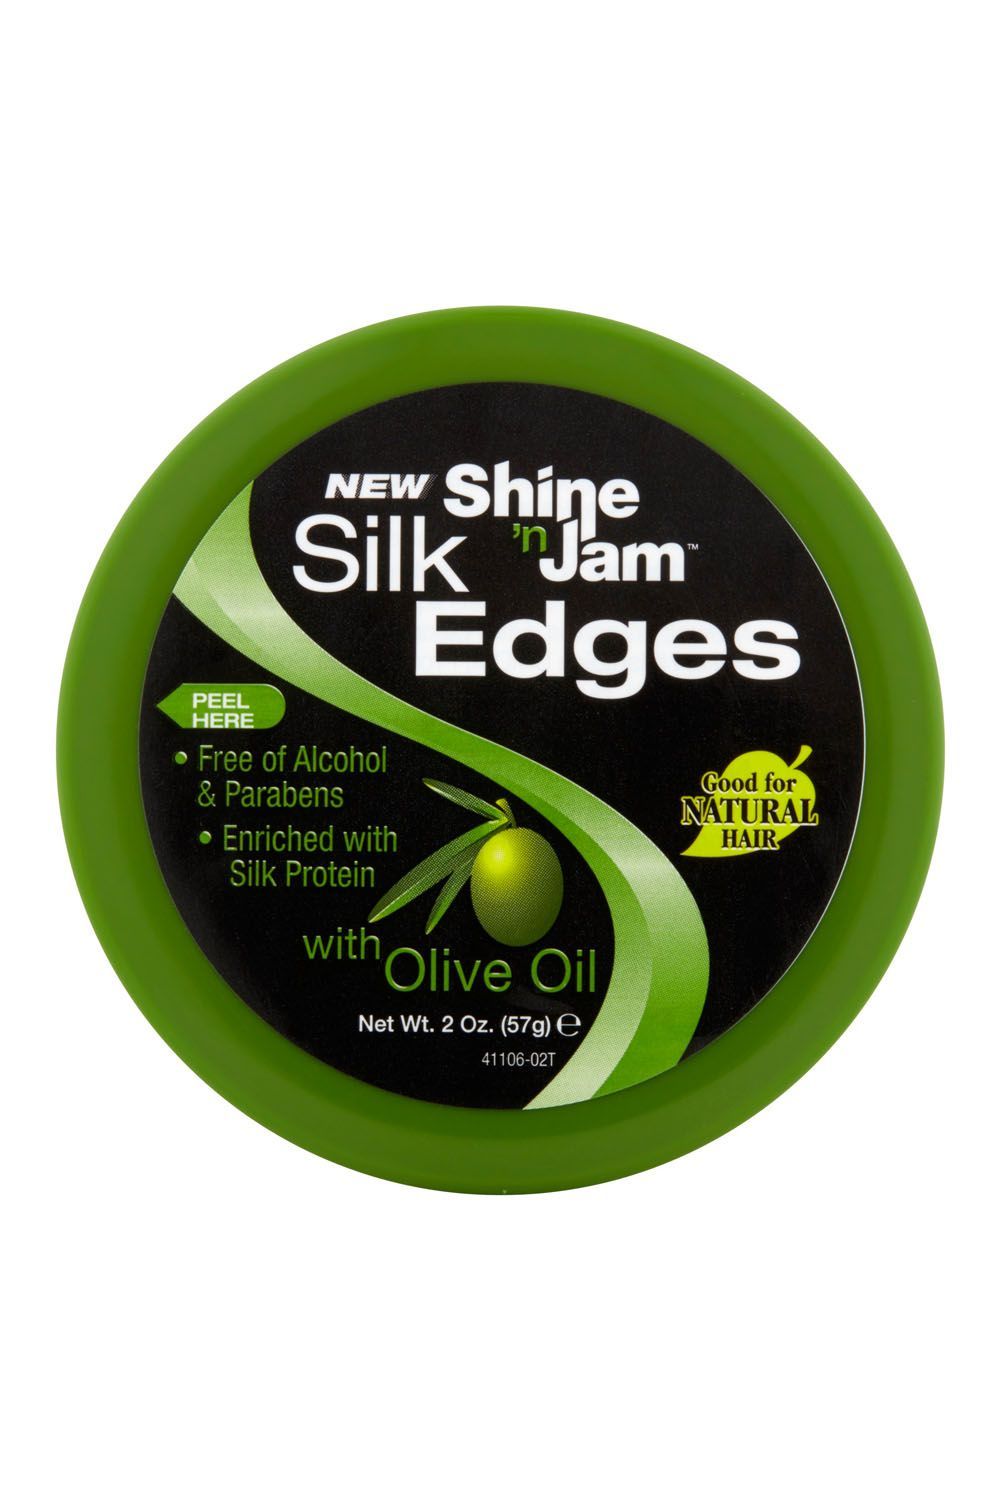 Ampro Pro Styl Shine ’n Jam Silk Edges